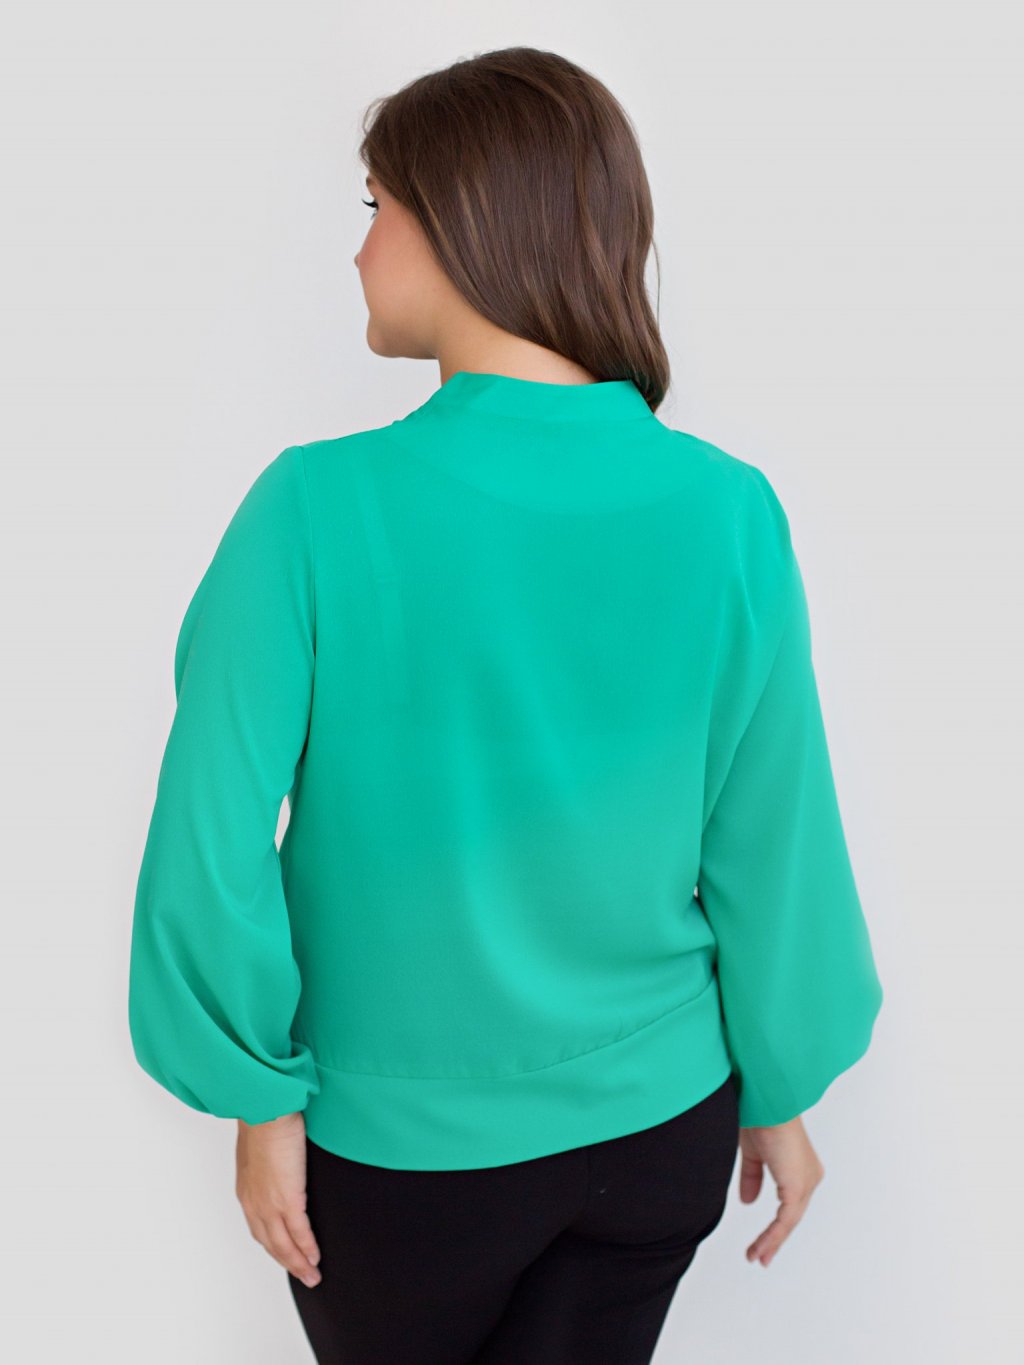 Блузка из креп шифона цвет зеленый (Б-111-1) - 3